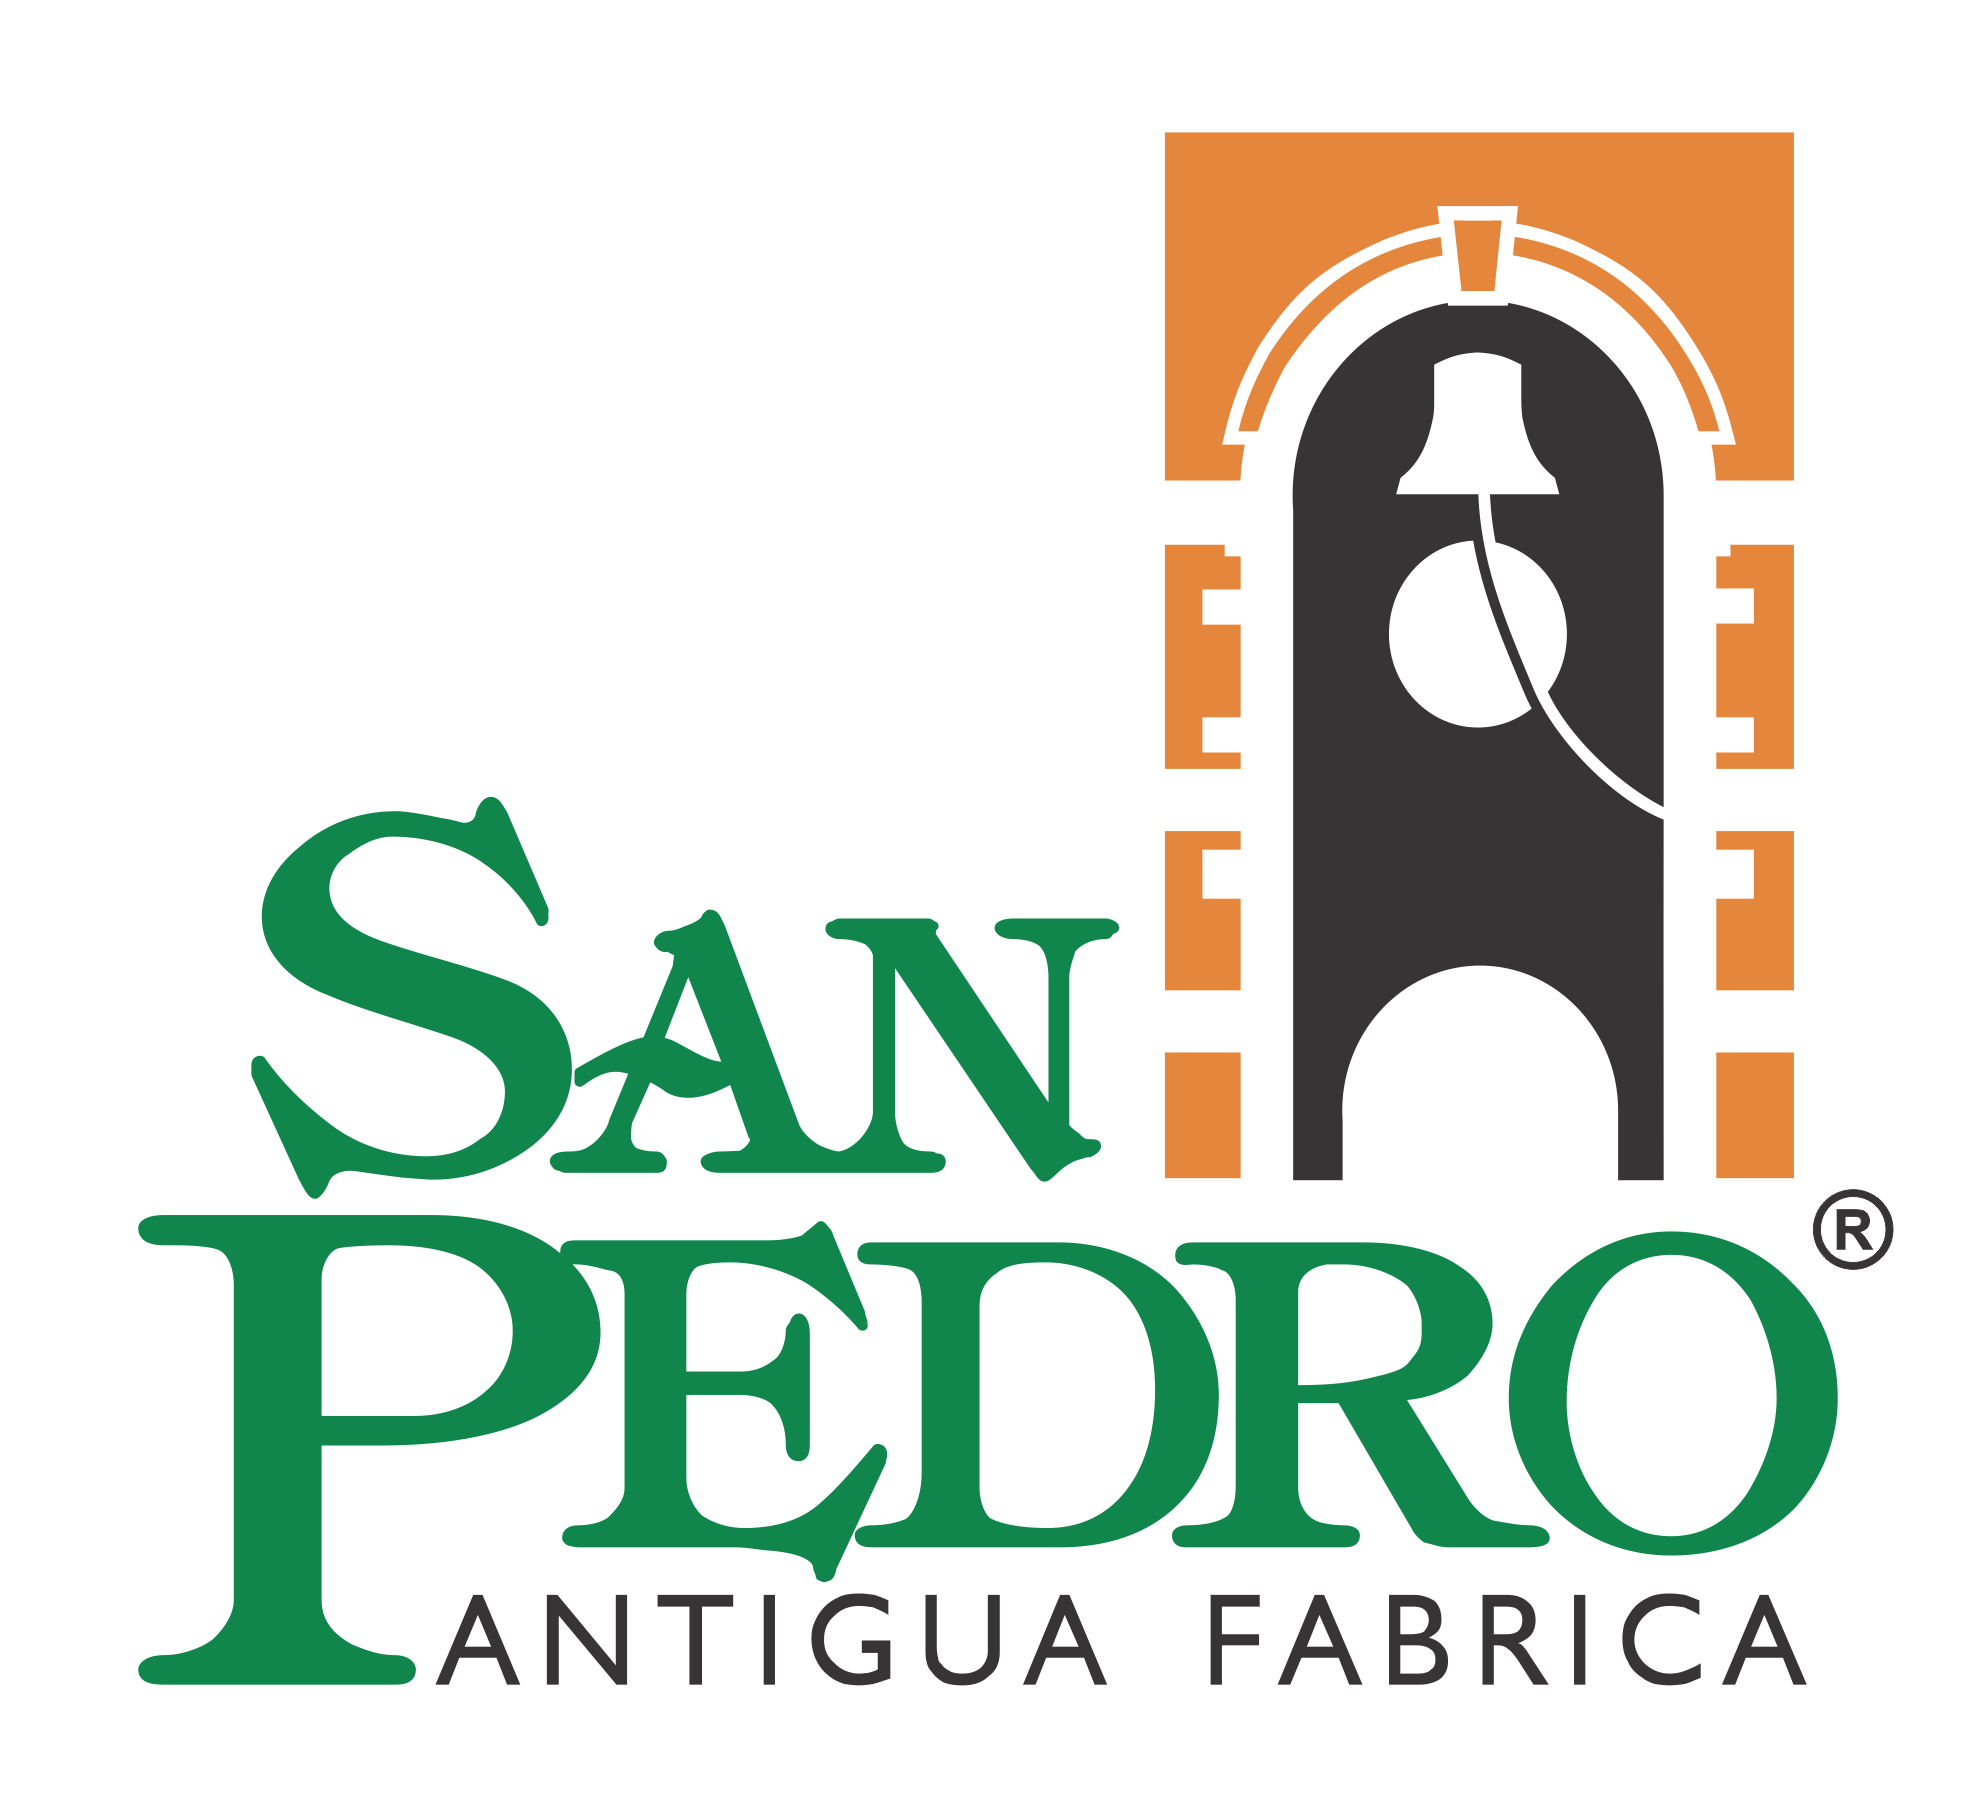 San Pedro Antigua Fábrica Logo